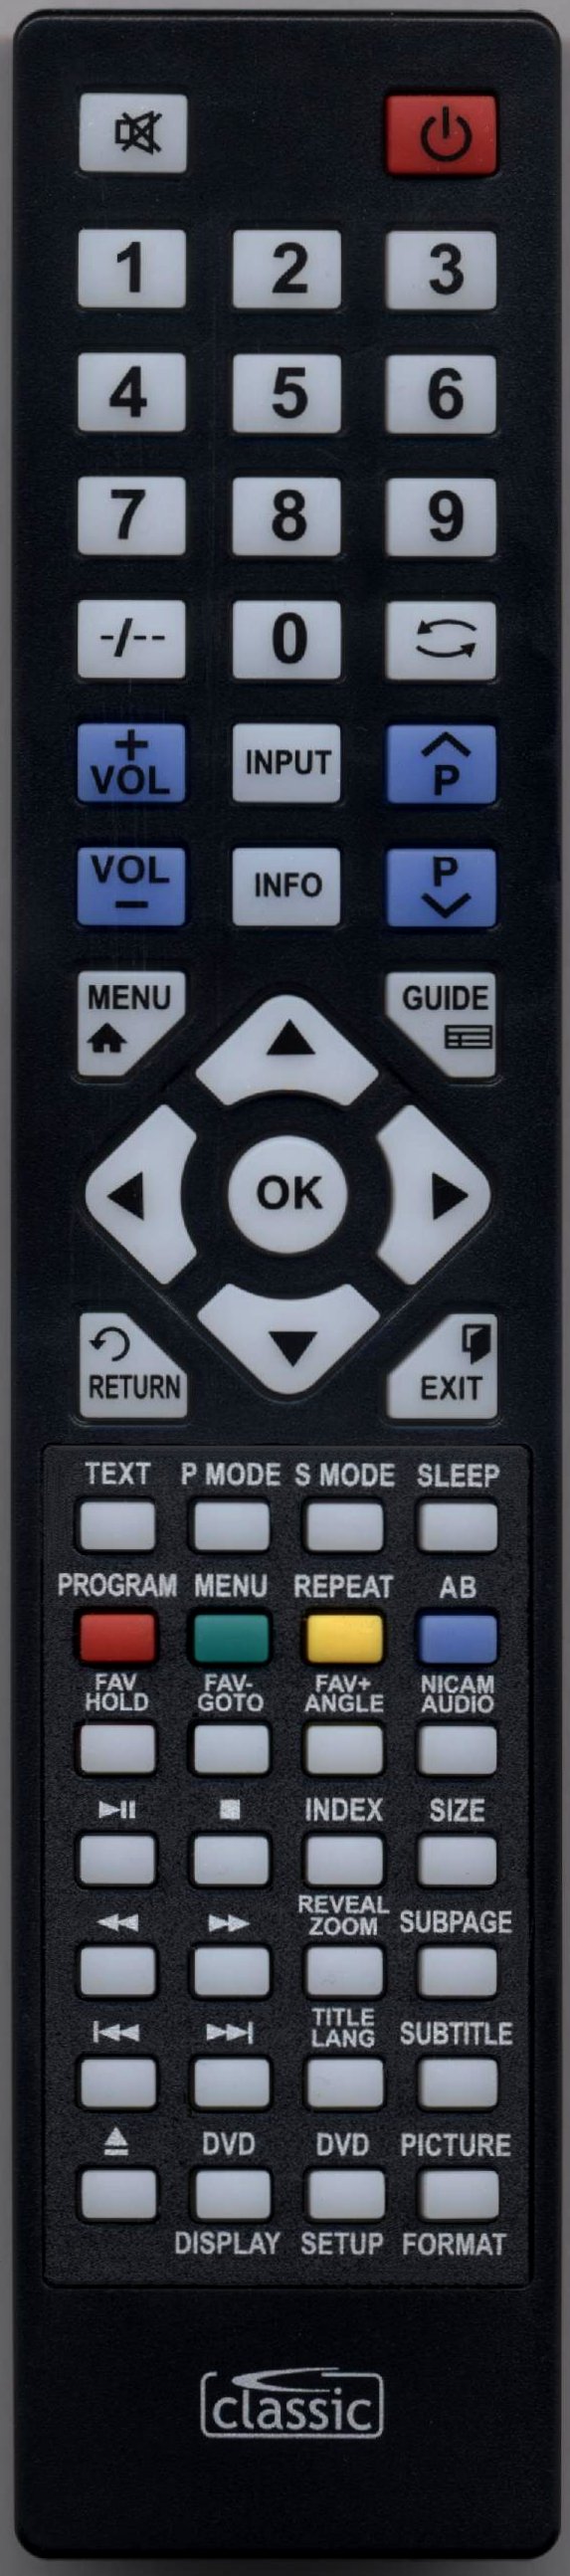 UMC UX22B16BTCDG863 Remote Control